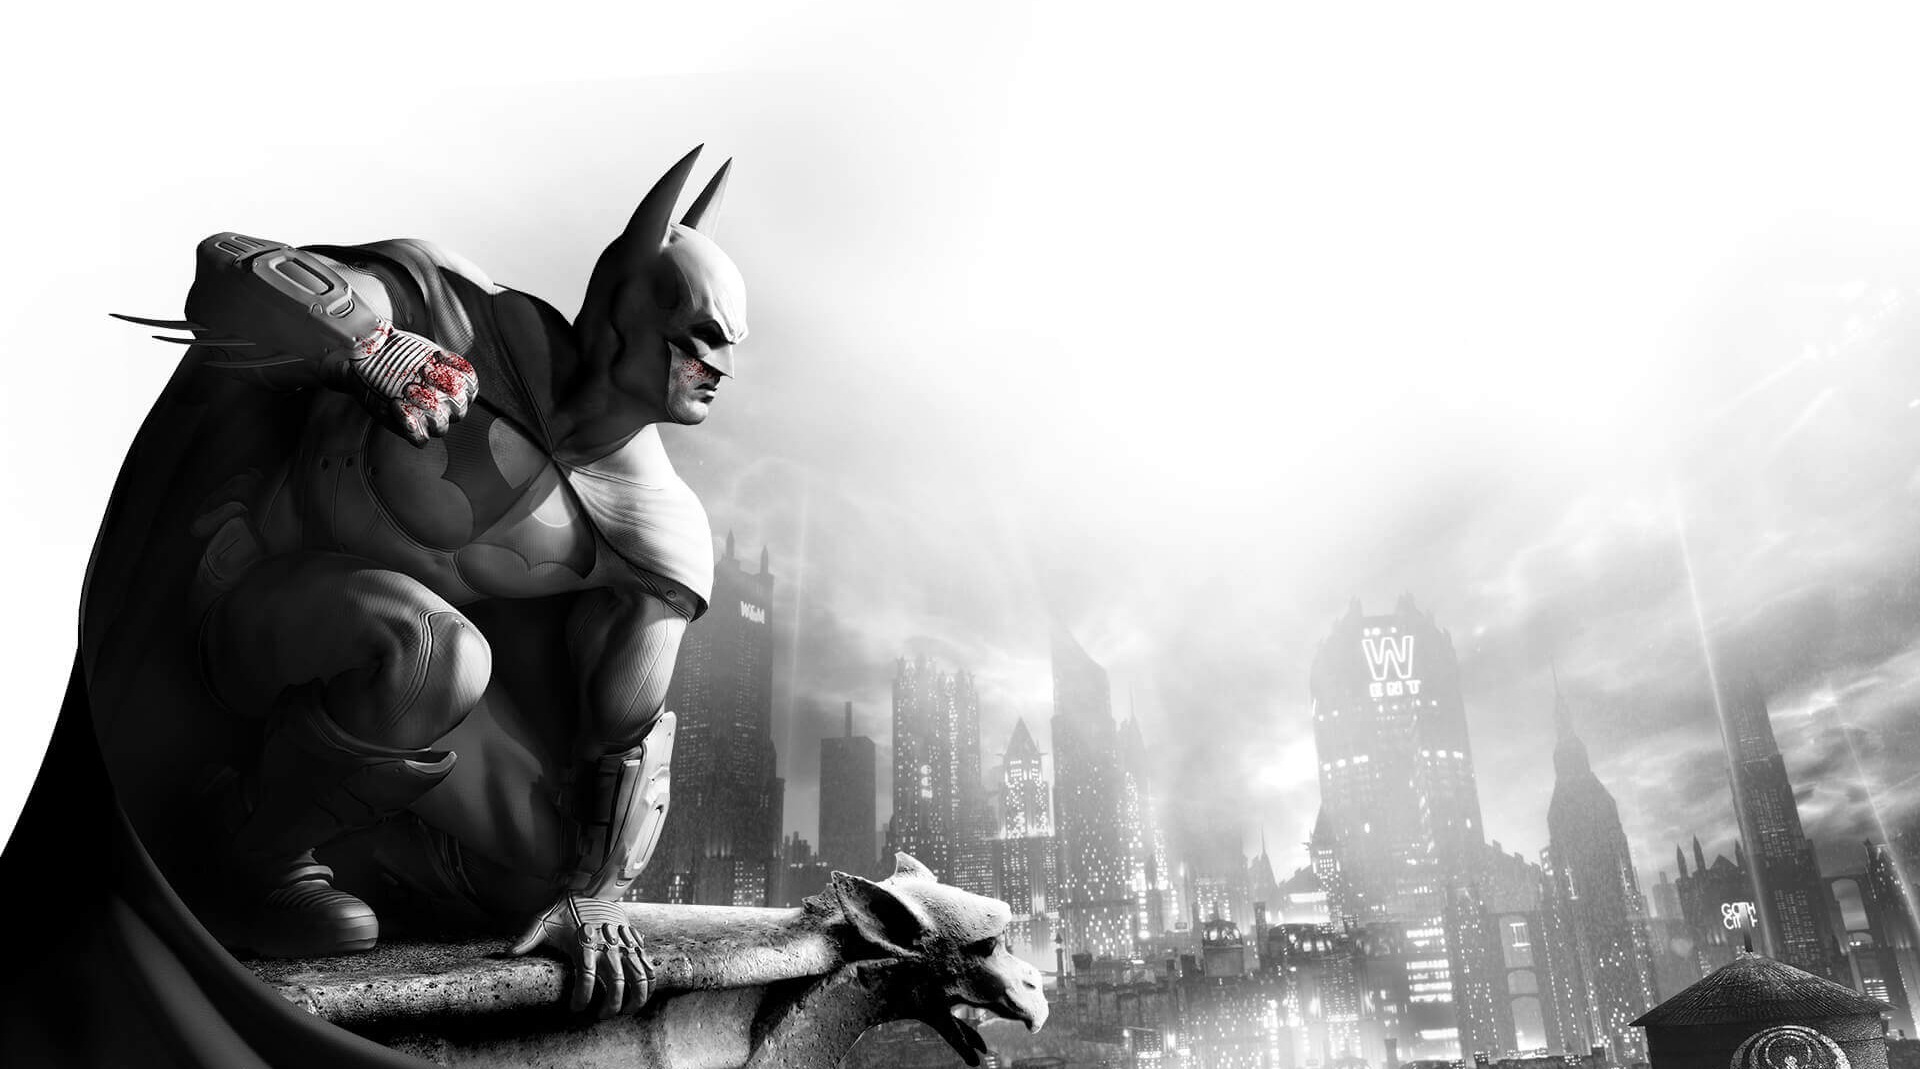 Batman Arkham City PC Download free full game for windows